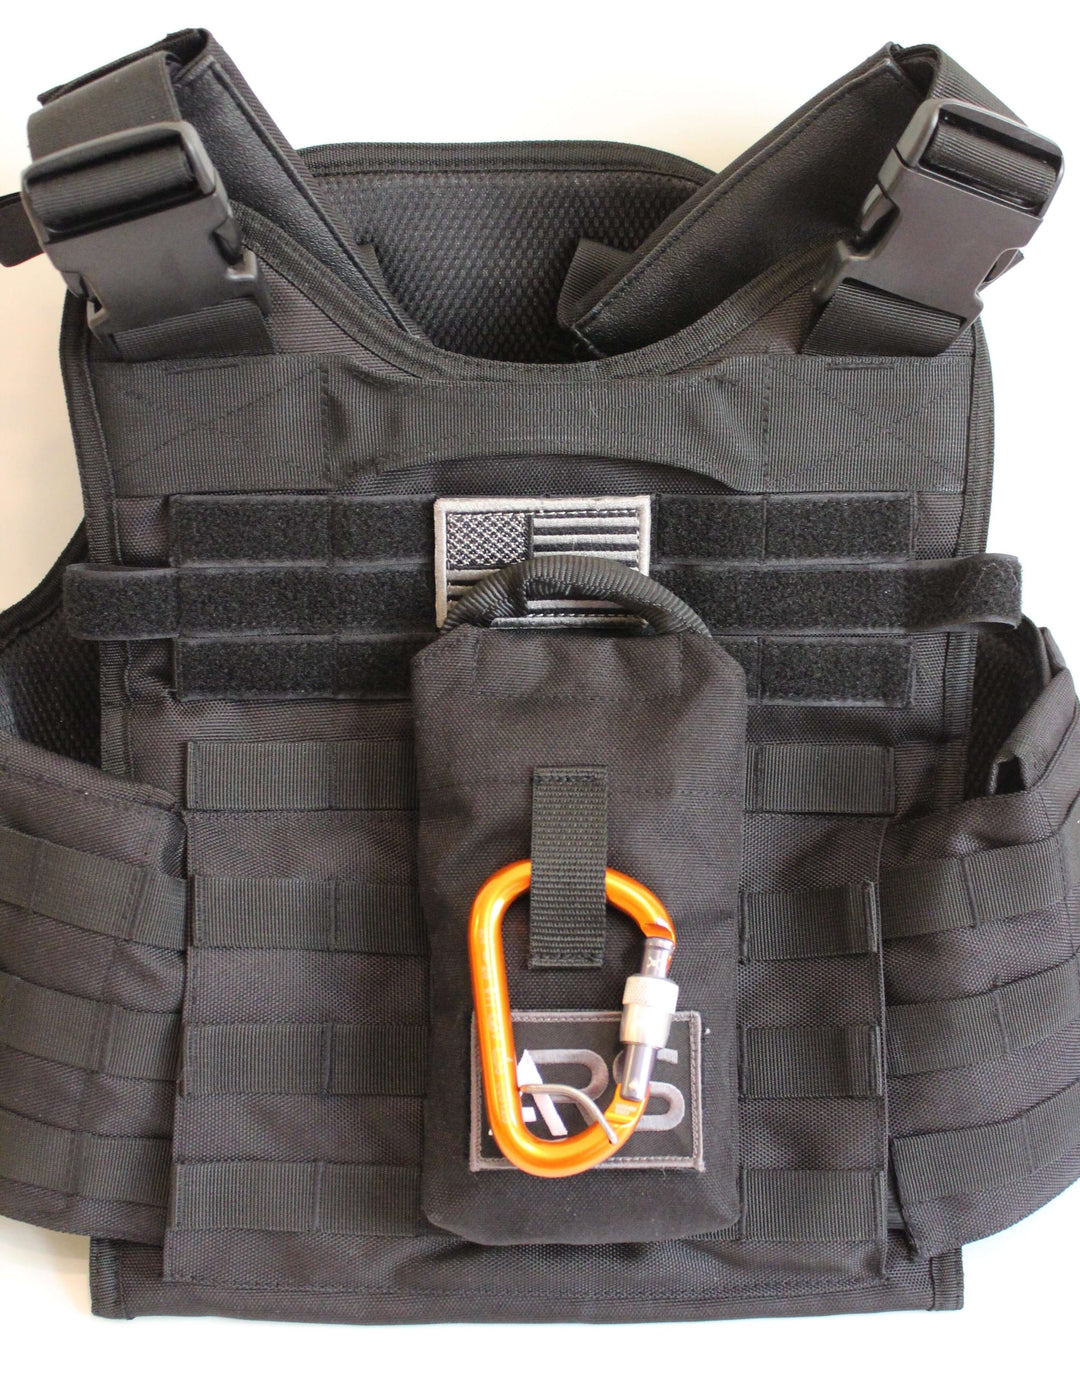 Tactical Rapid Deployment Bag on tactical vest